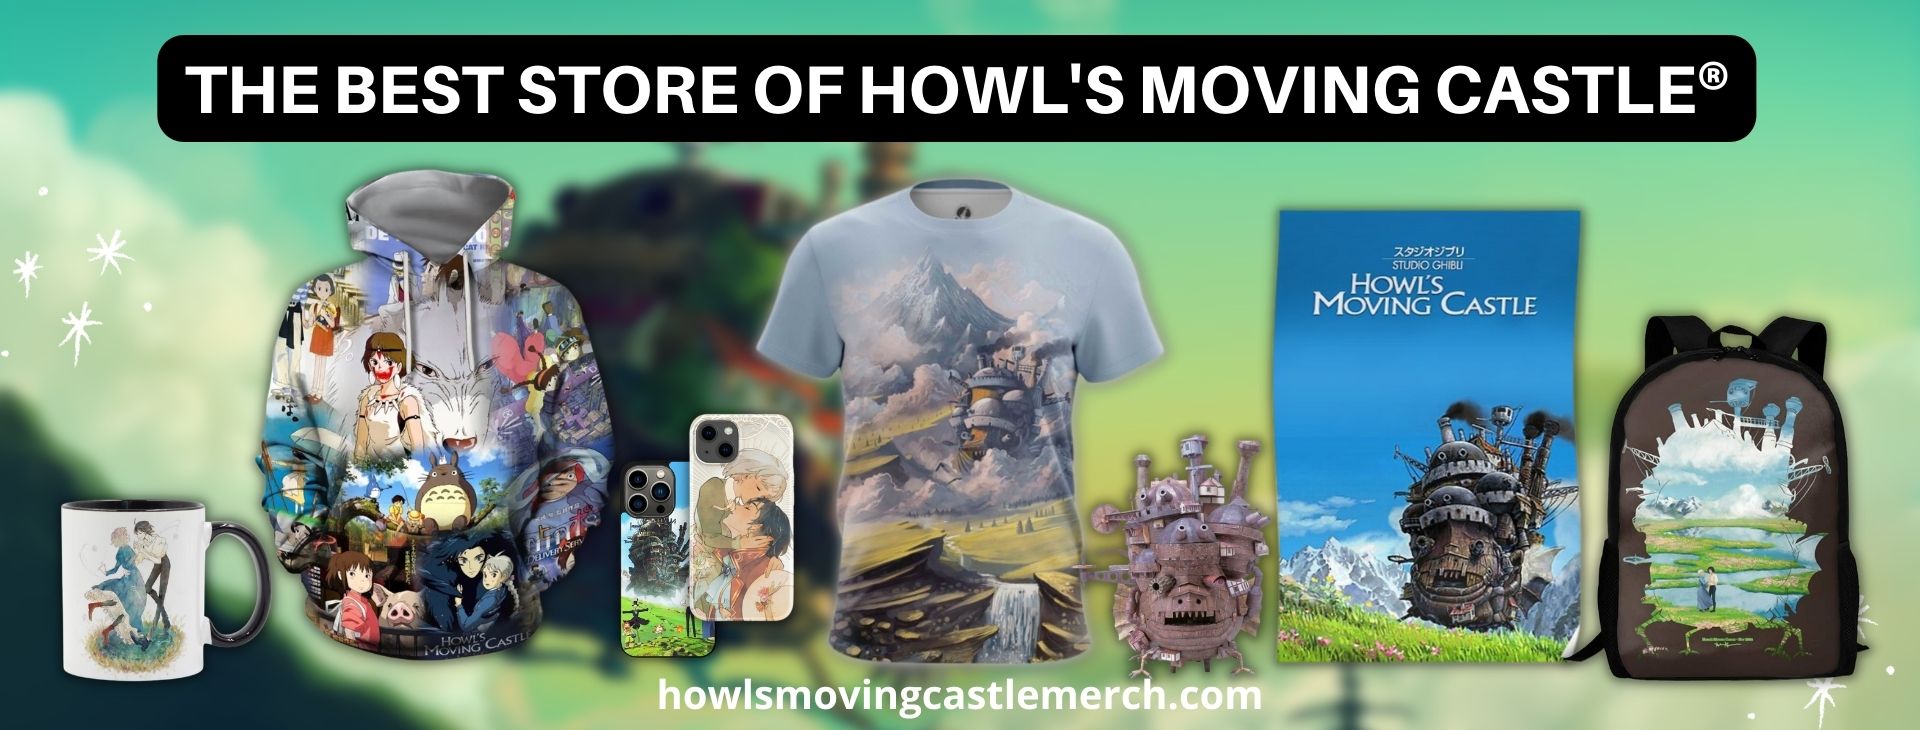 howls moving castle Banner - Howl's Moving Castle Merch